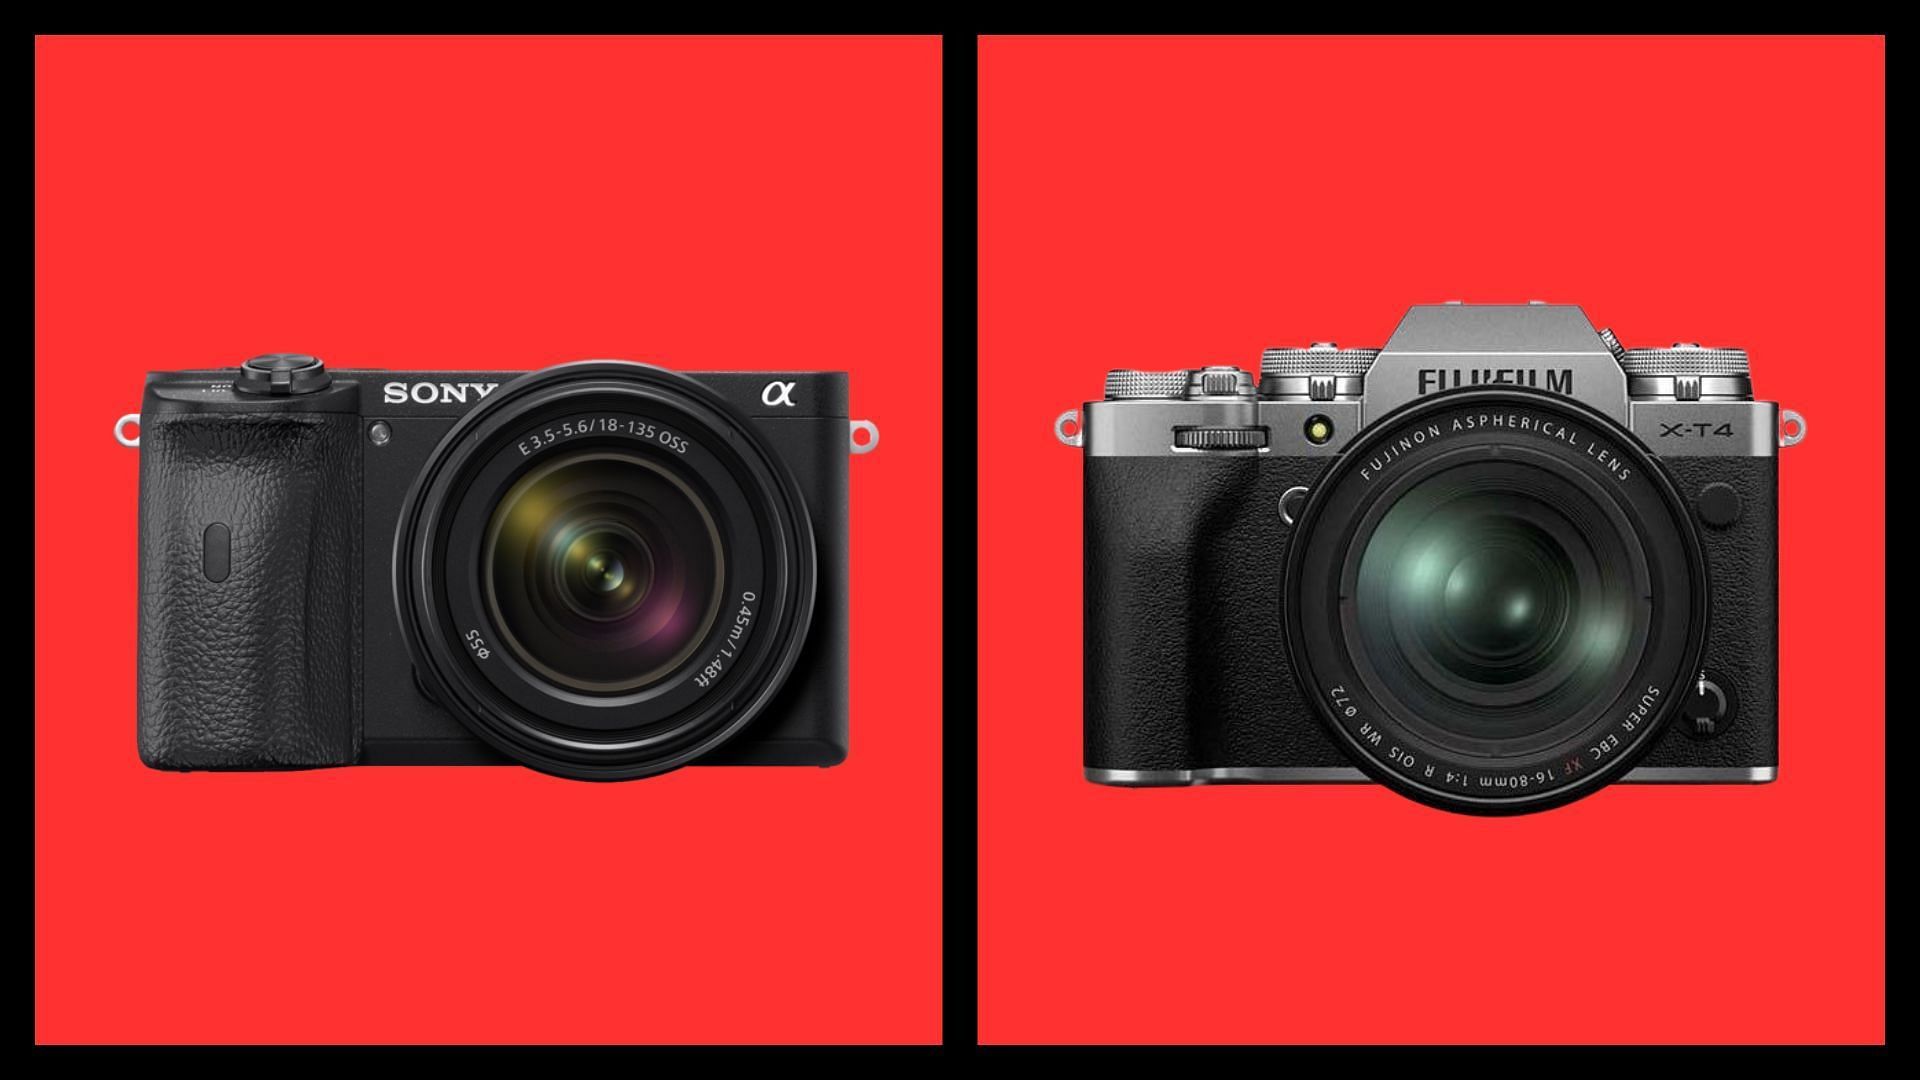 Sony Alpha 6600 vs Fujifilm XT-4 comparison (Image via Sony, Fujifilm)